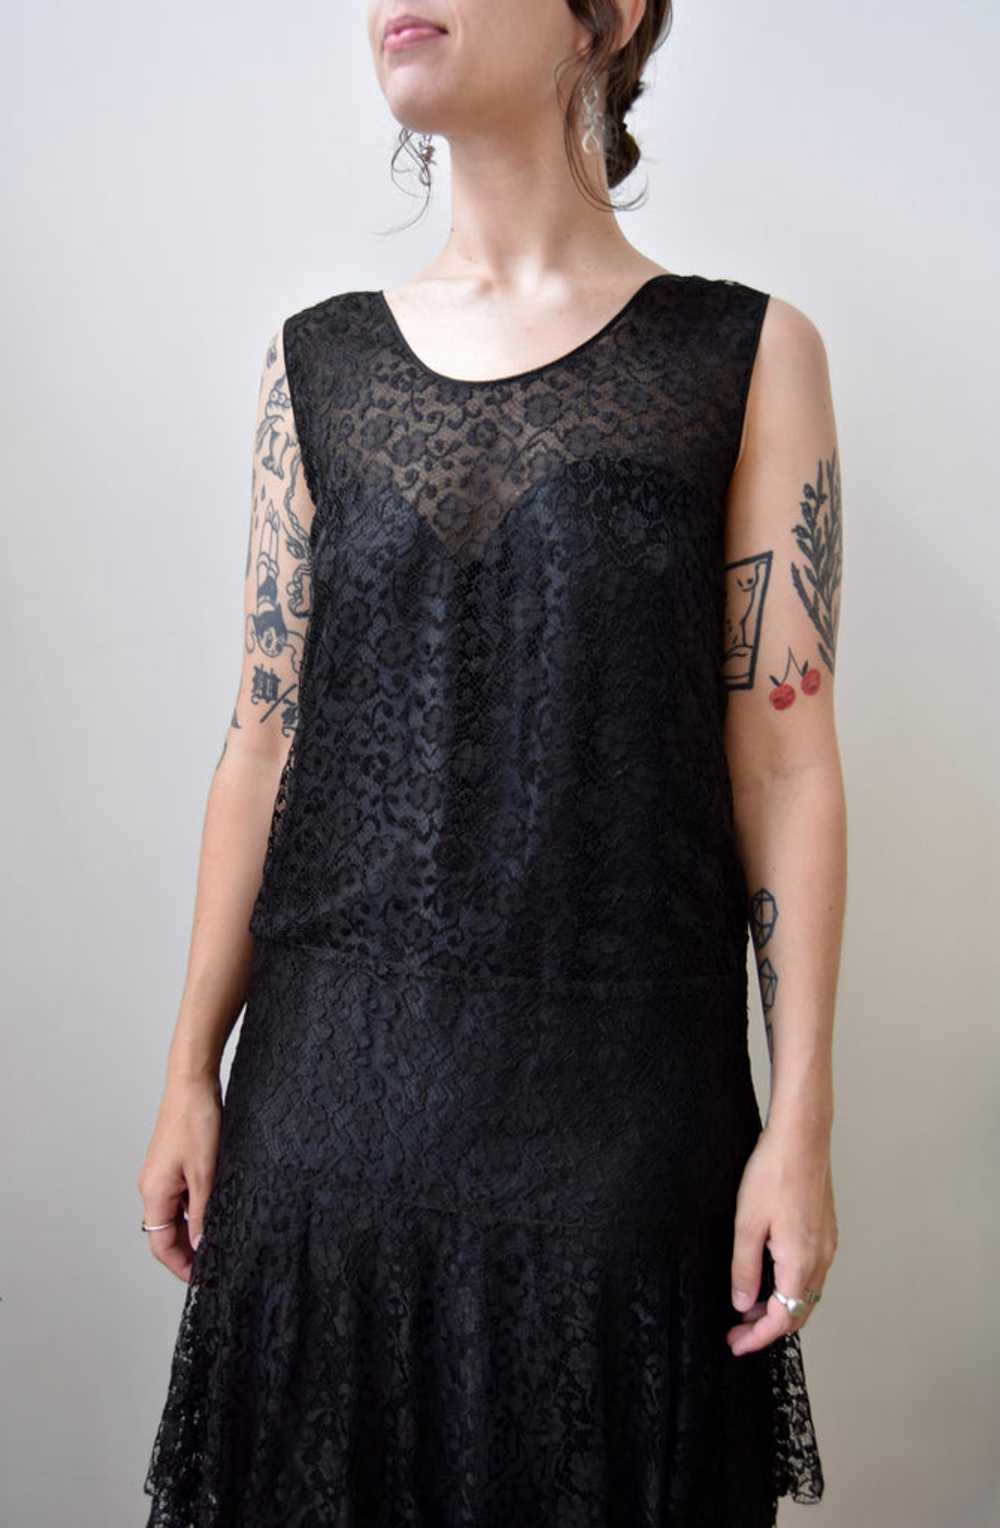 Twenties Black Lace Dress - image 2